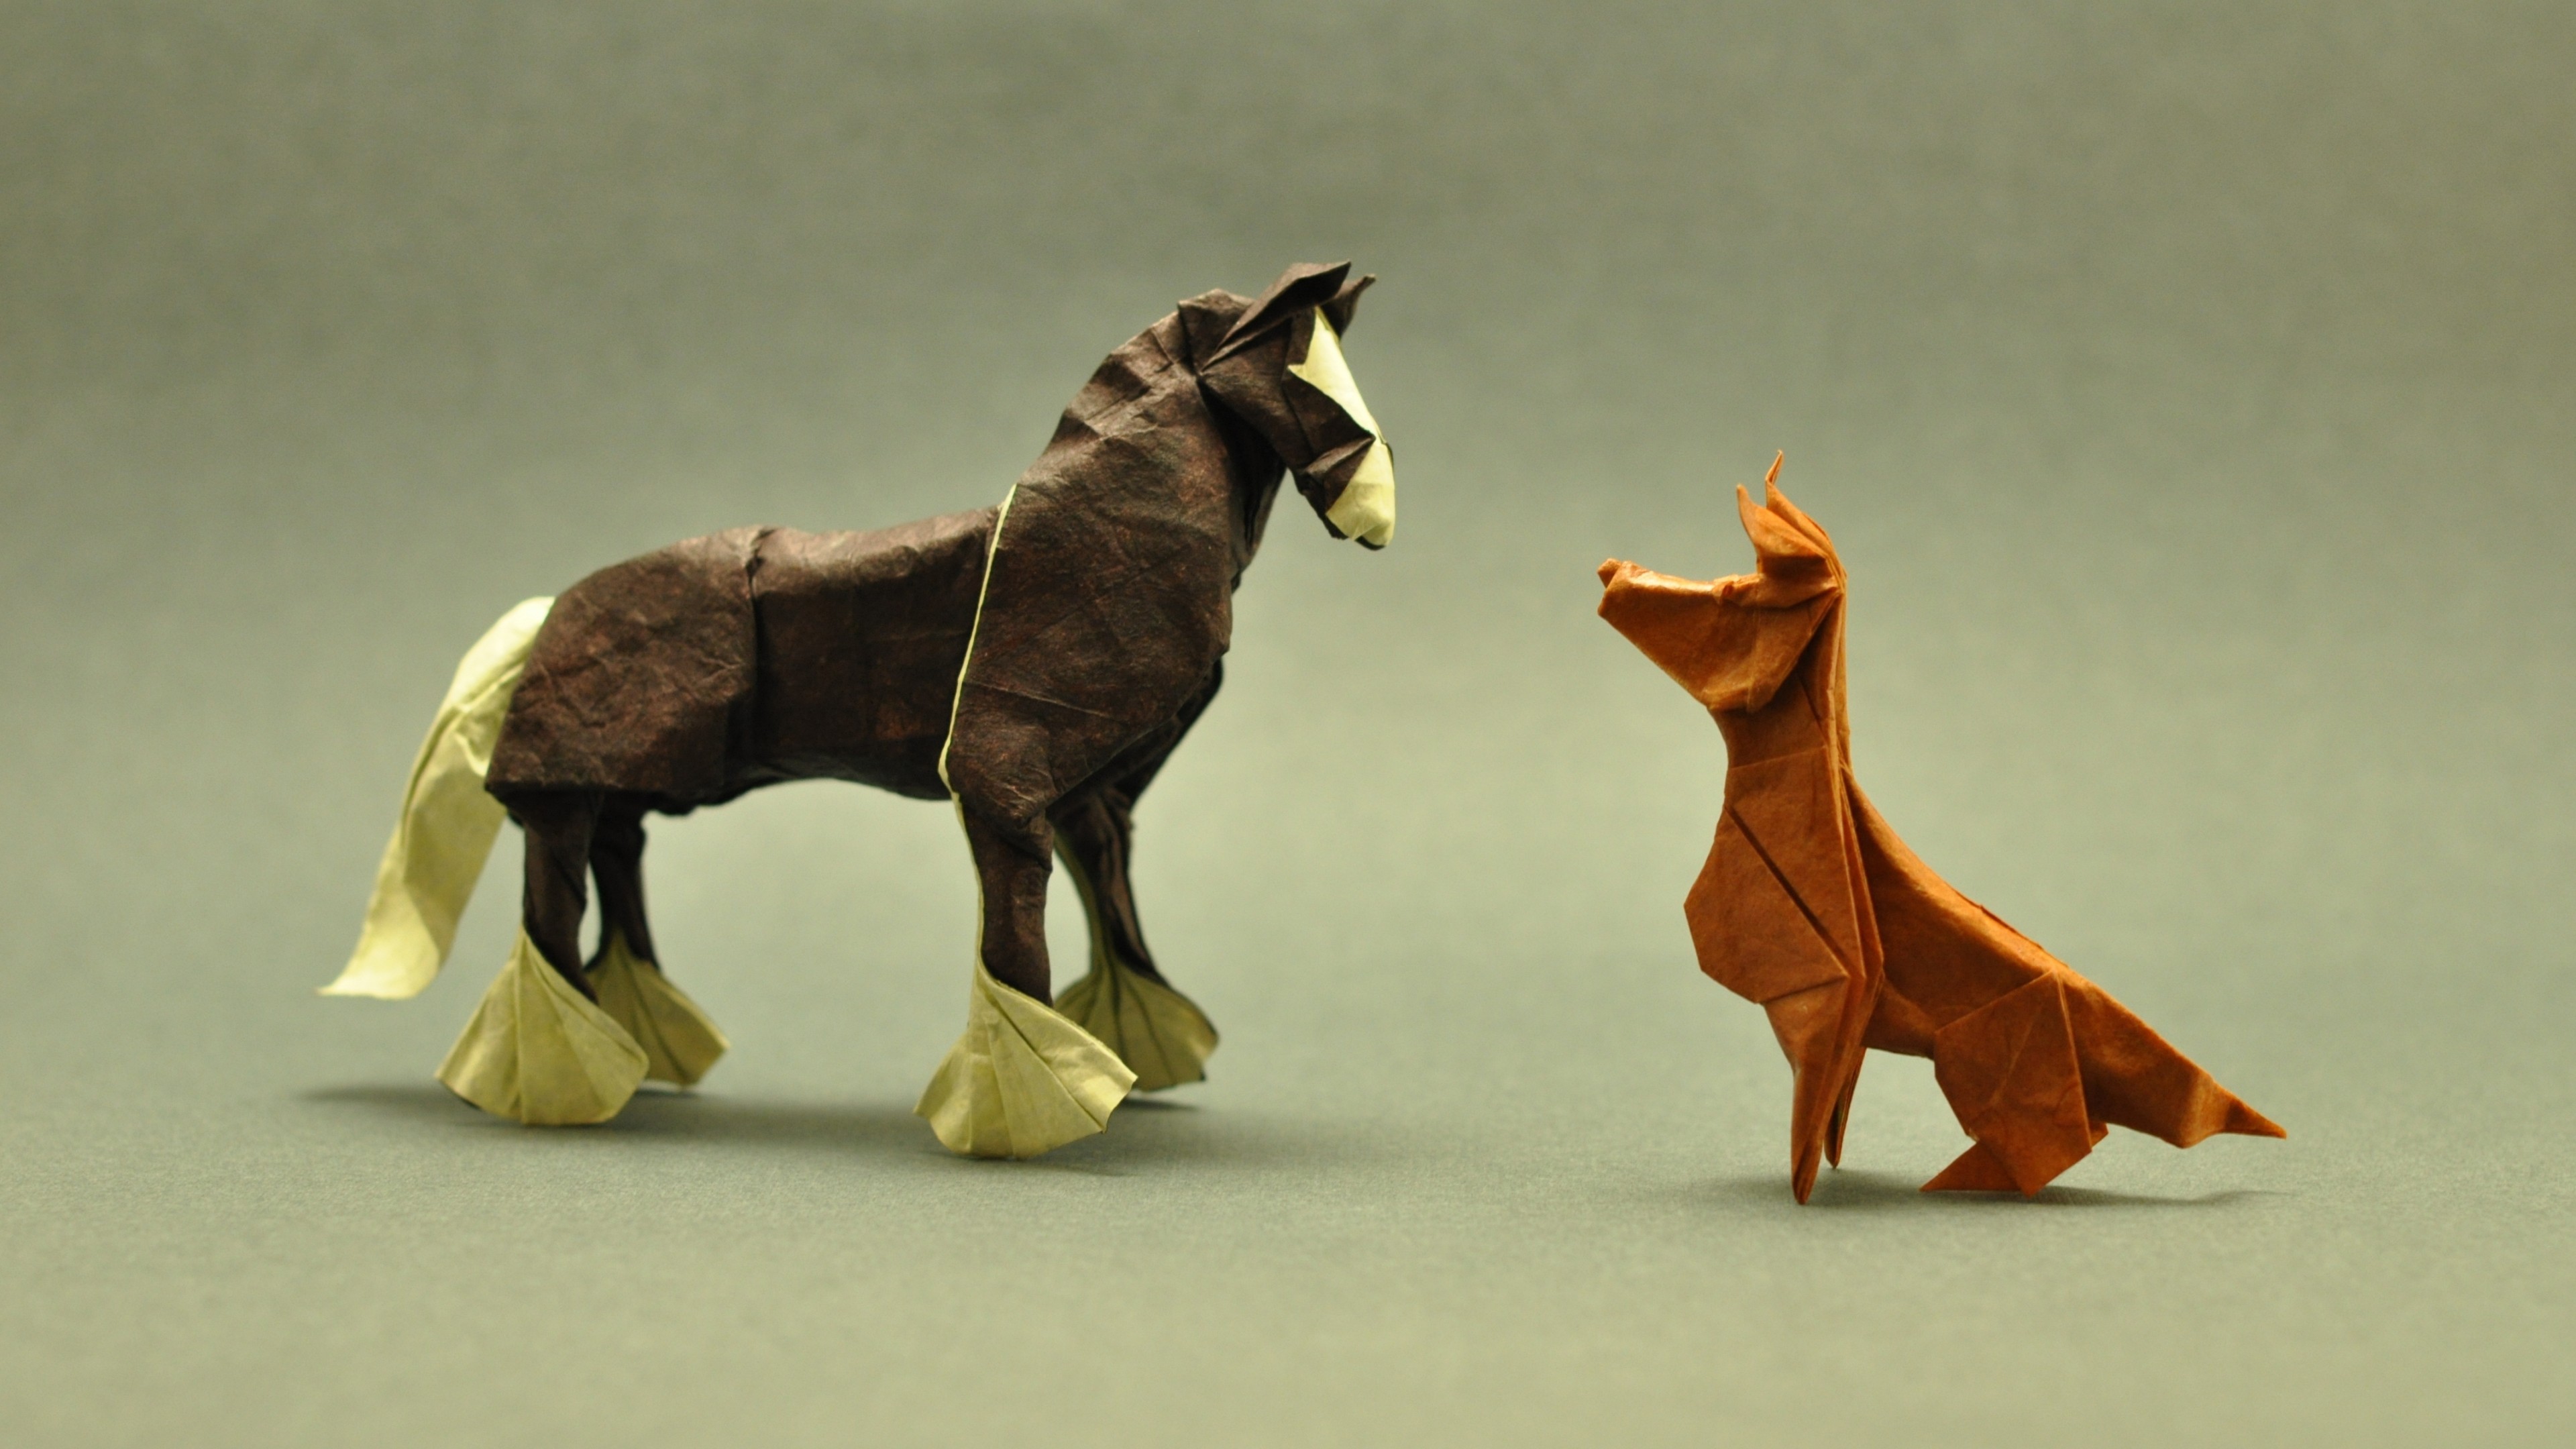 General 3840x2160 animals origami paper horse dog simple background artwork minimalism depth of field